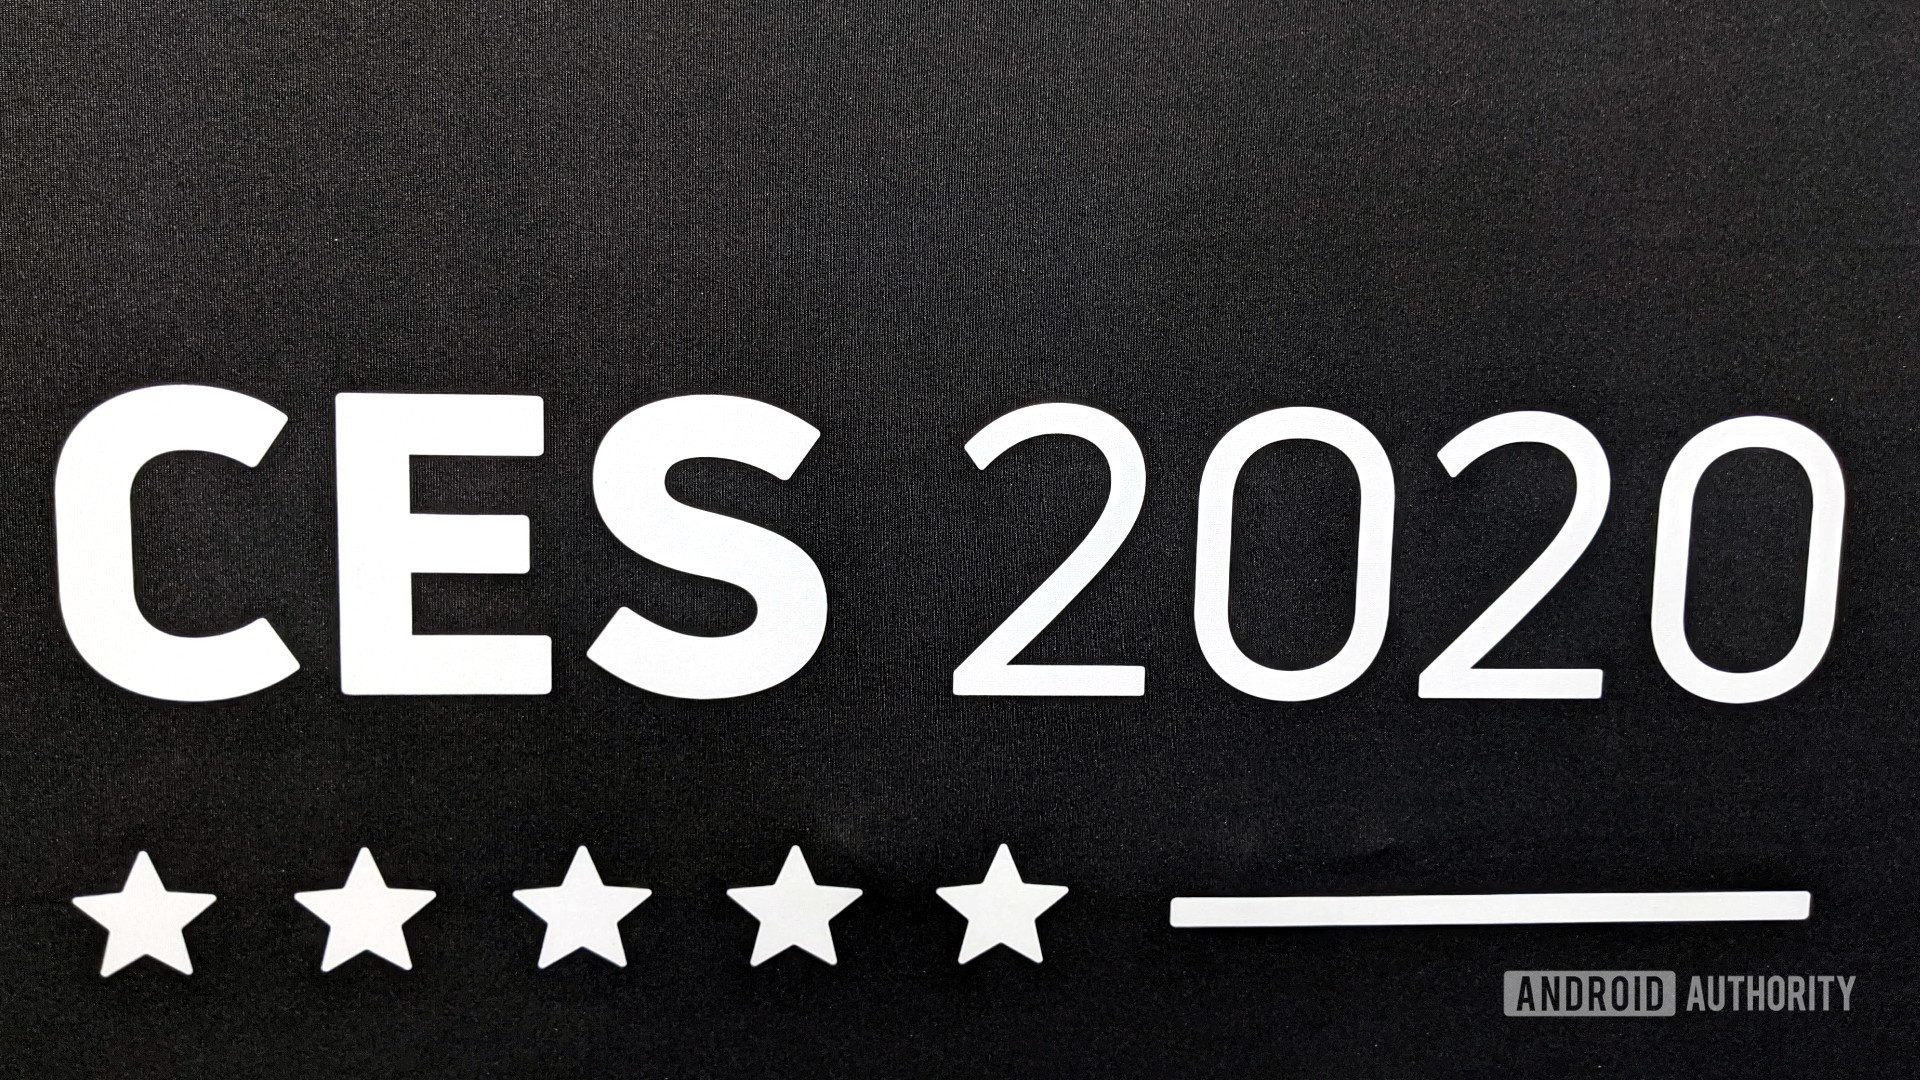 CES 2020 logo aa